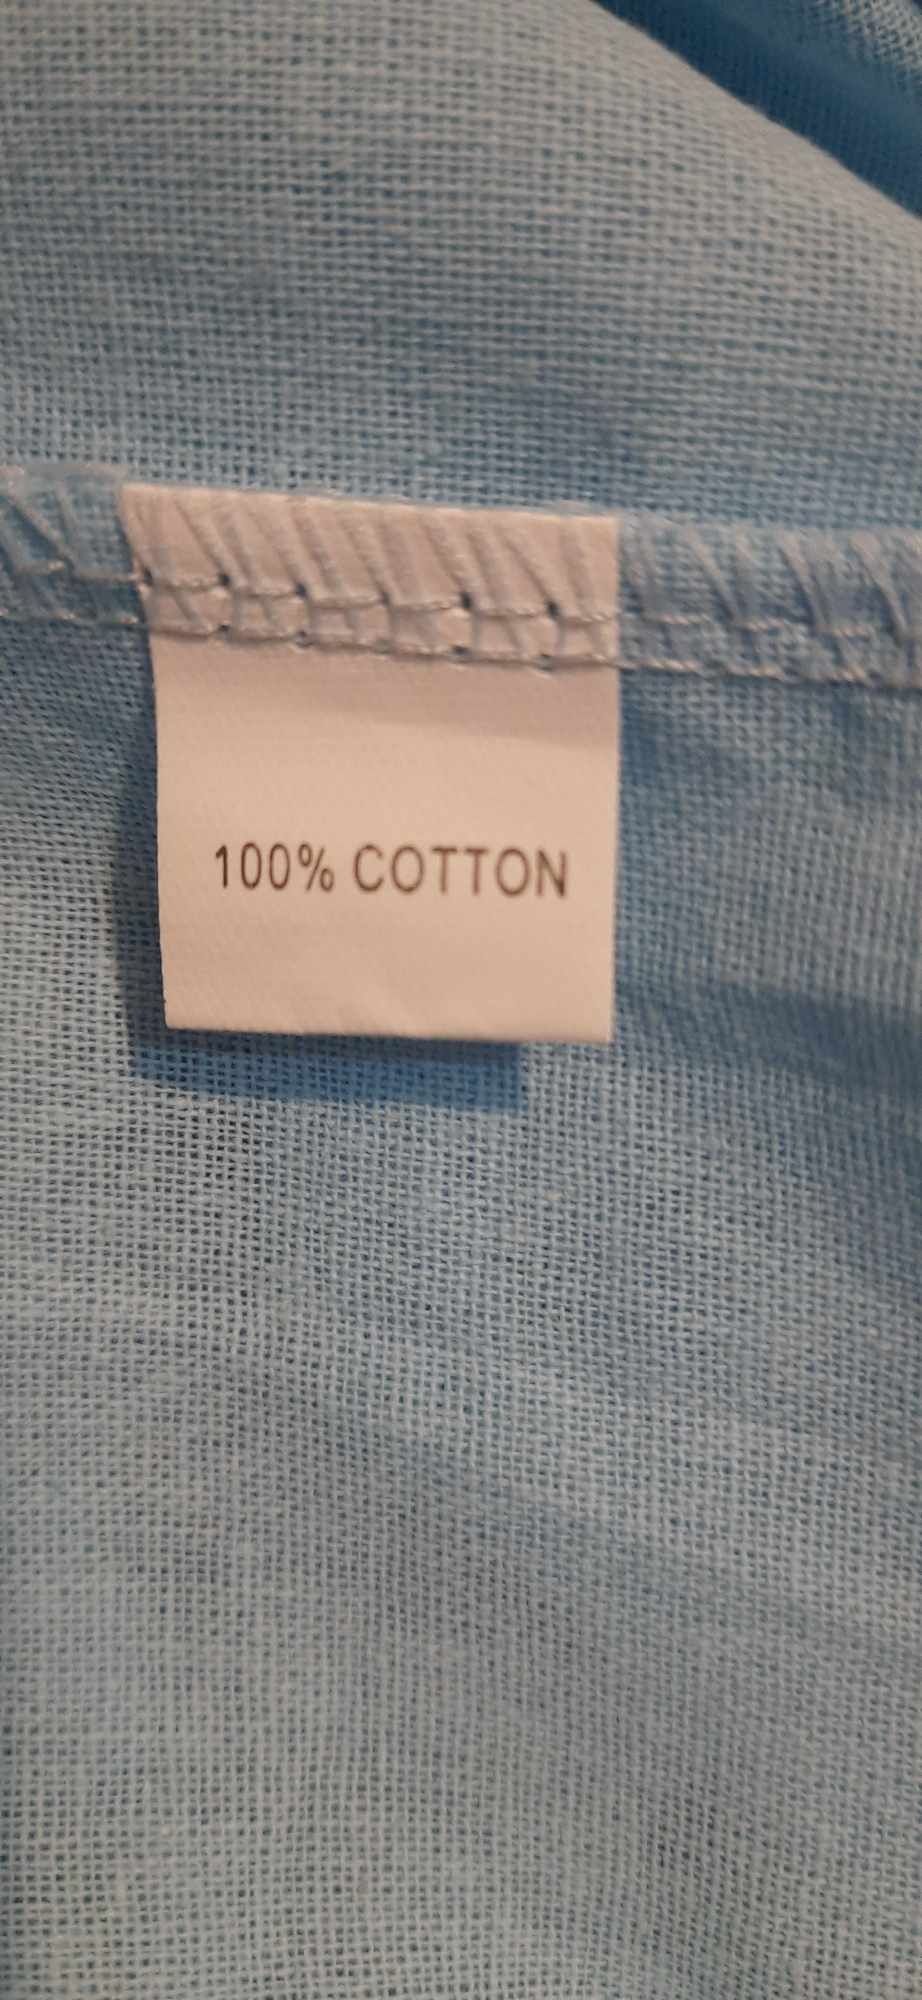 Koszula męska 100% bawełna niebieska bdb kieszonki XL